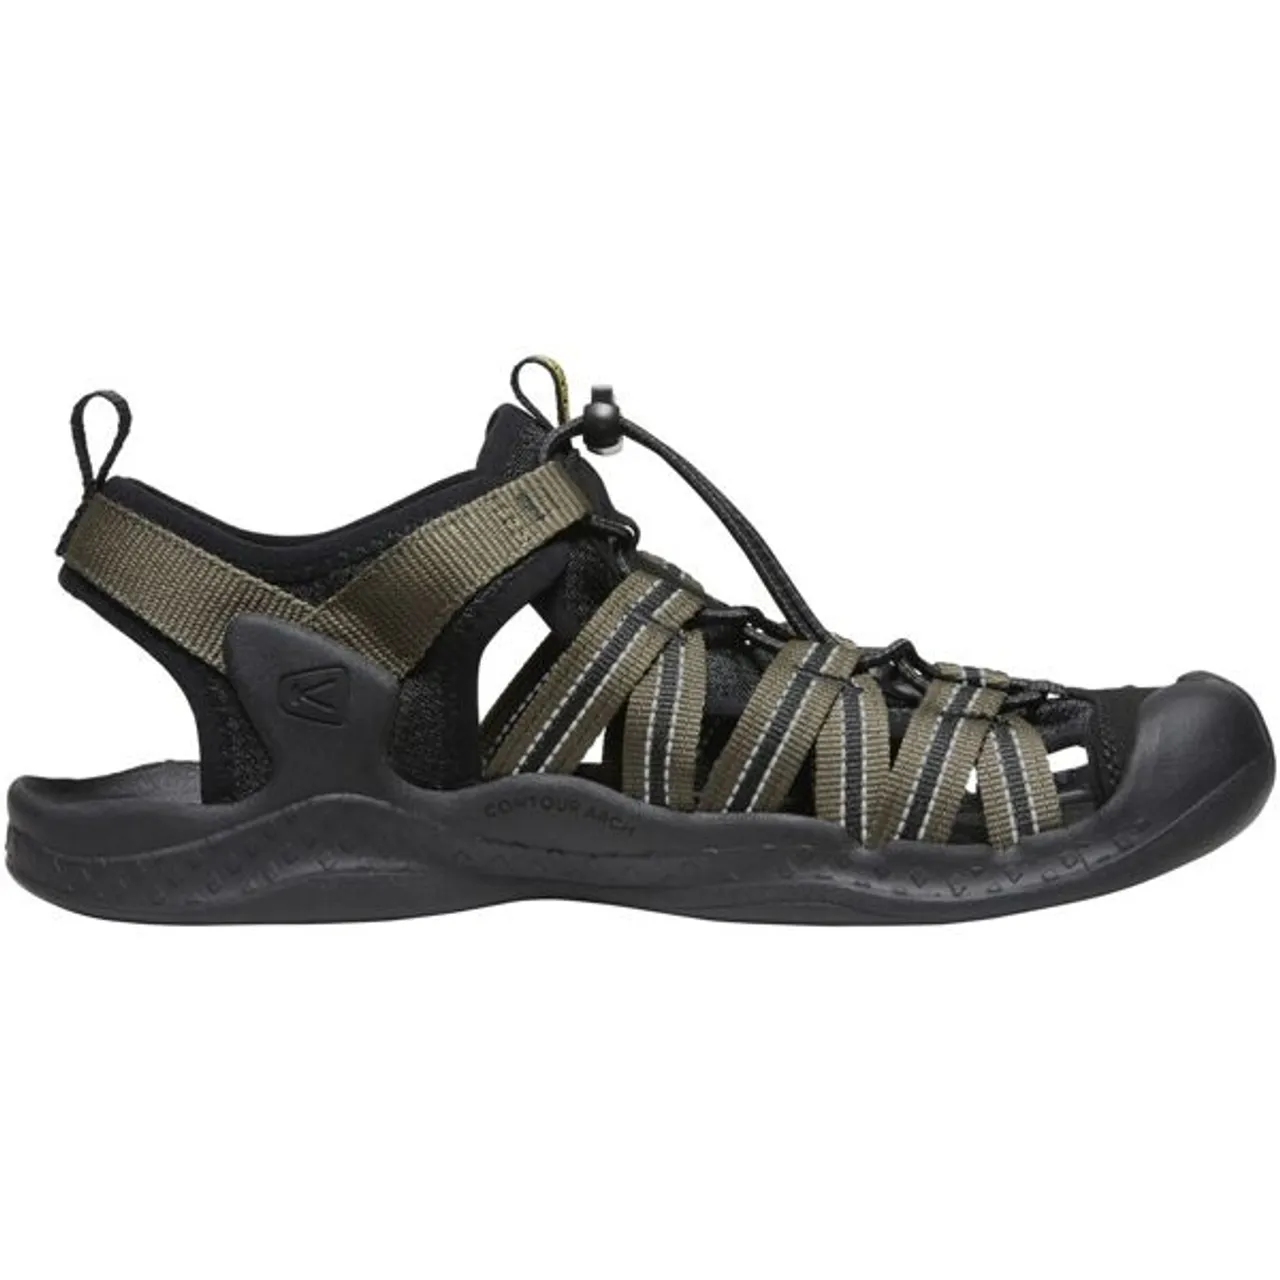 Sandale KEEN "DRIFT CREEK H2" Gr. 44, grün (dark olive, black) Schuhe Stoffschuhe